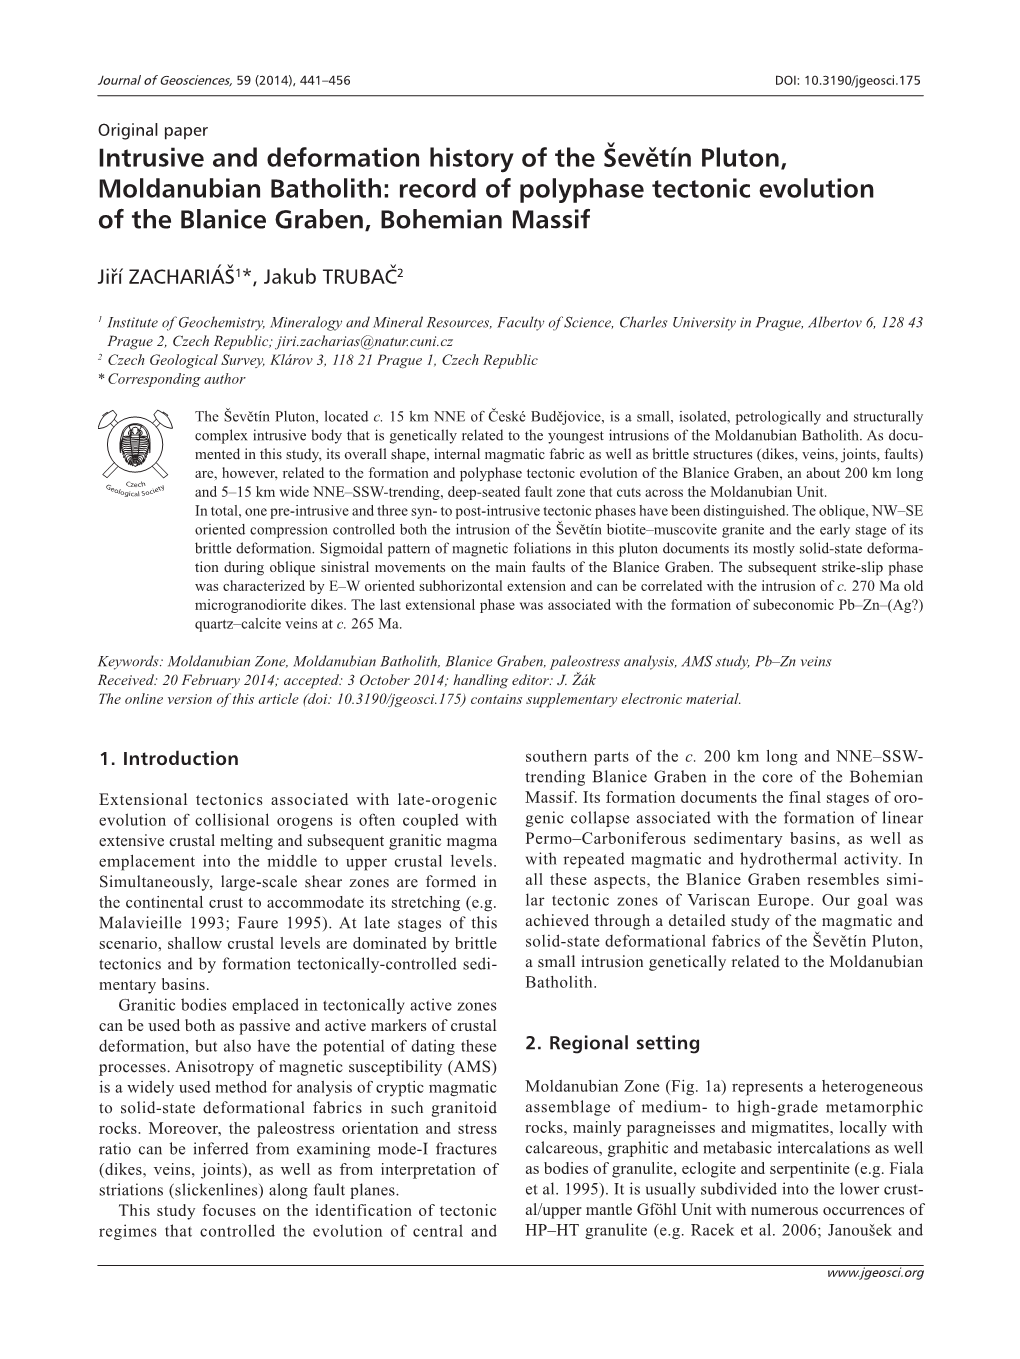 Intrusive and Deformation History of the Ševětín Pluton, Moldanubian Batholith: Record of Polyphase Tectonic Evolution of the Blanice Graben, Bohemian Massif